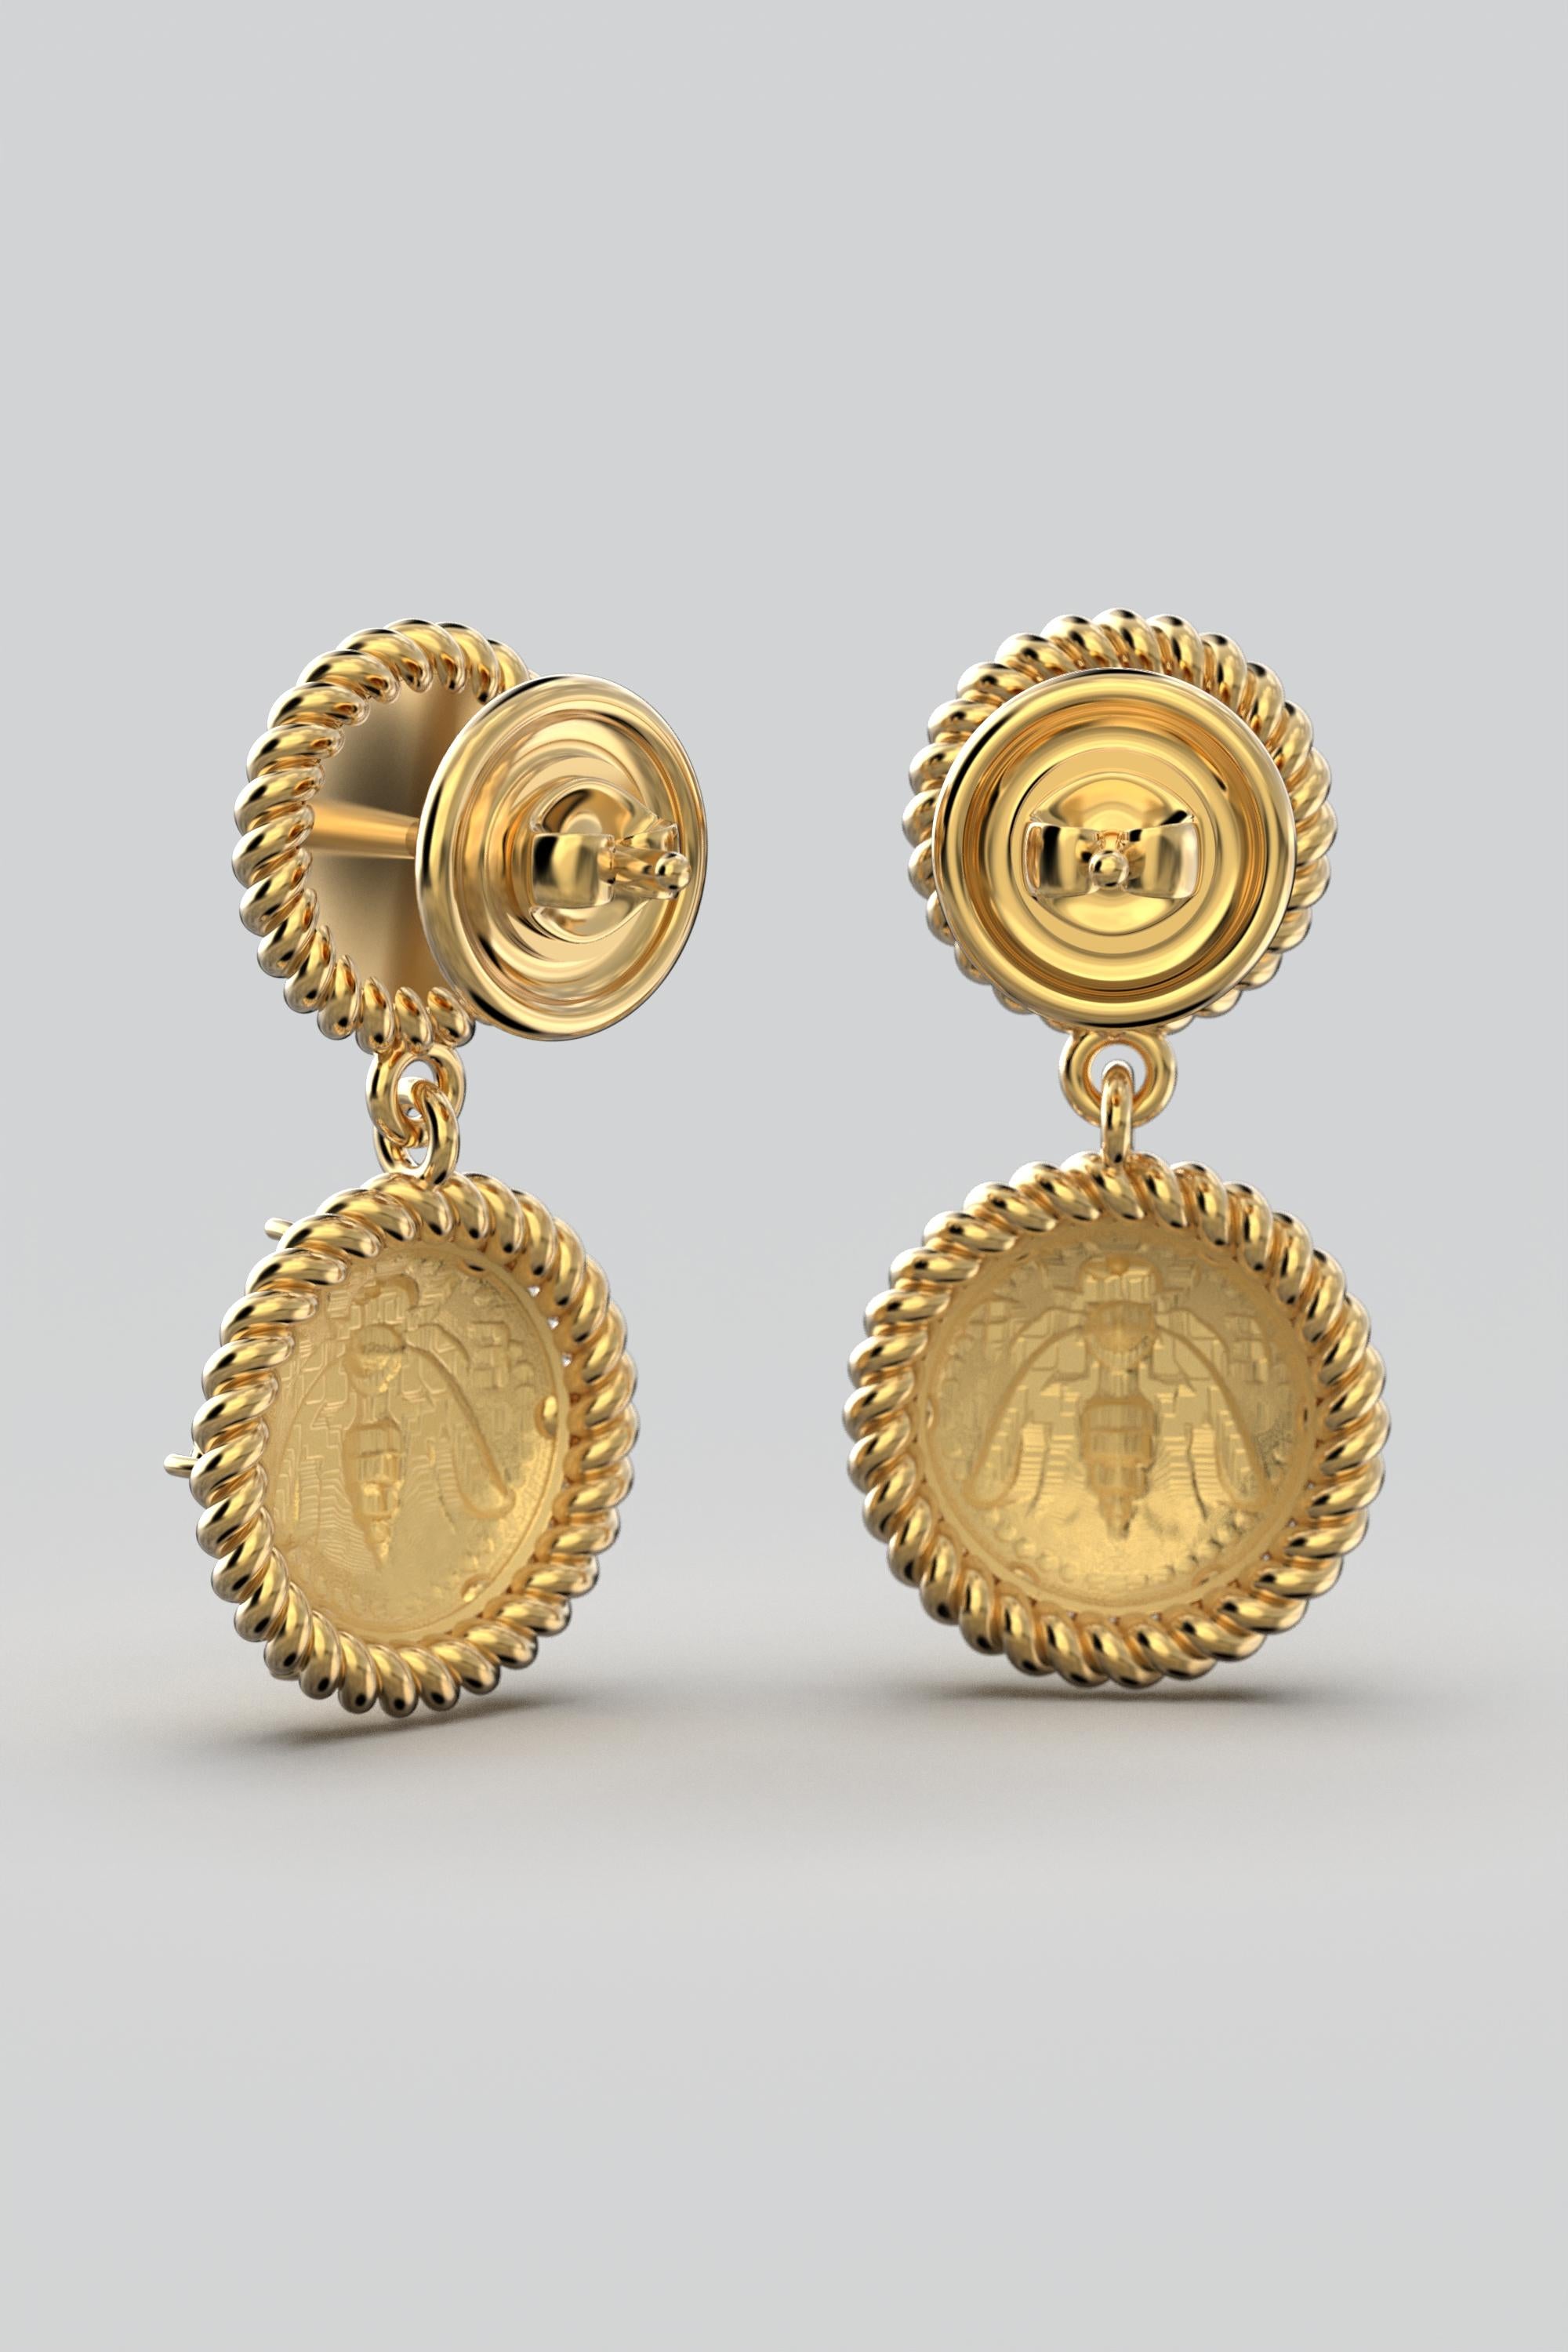 italian gold jewelry 18k